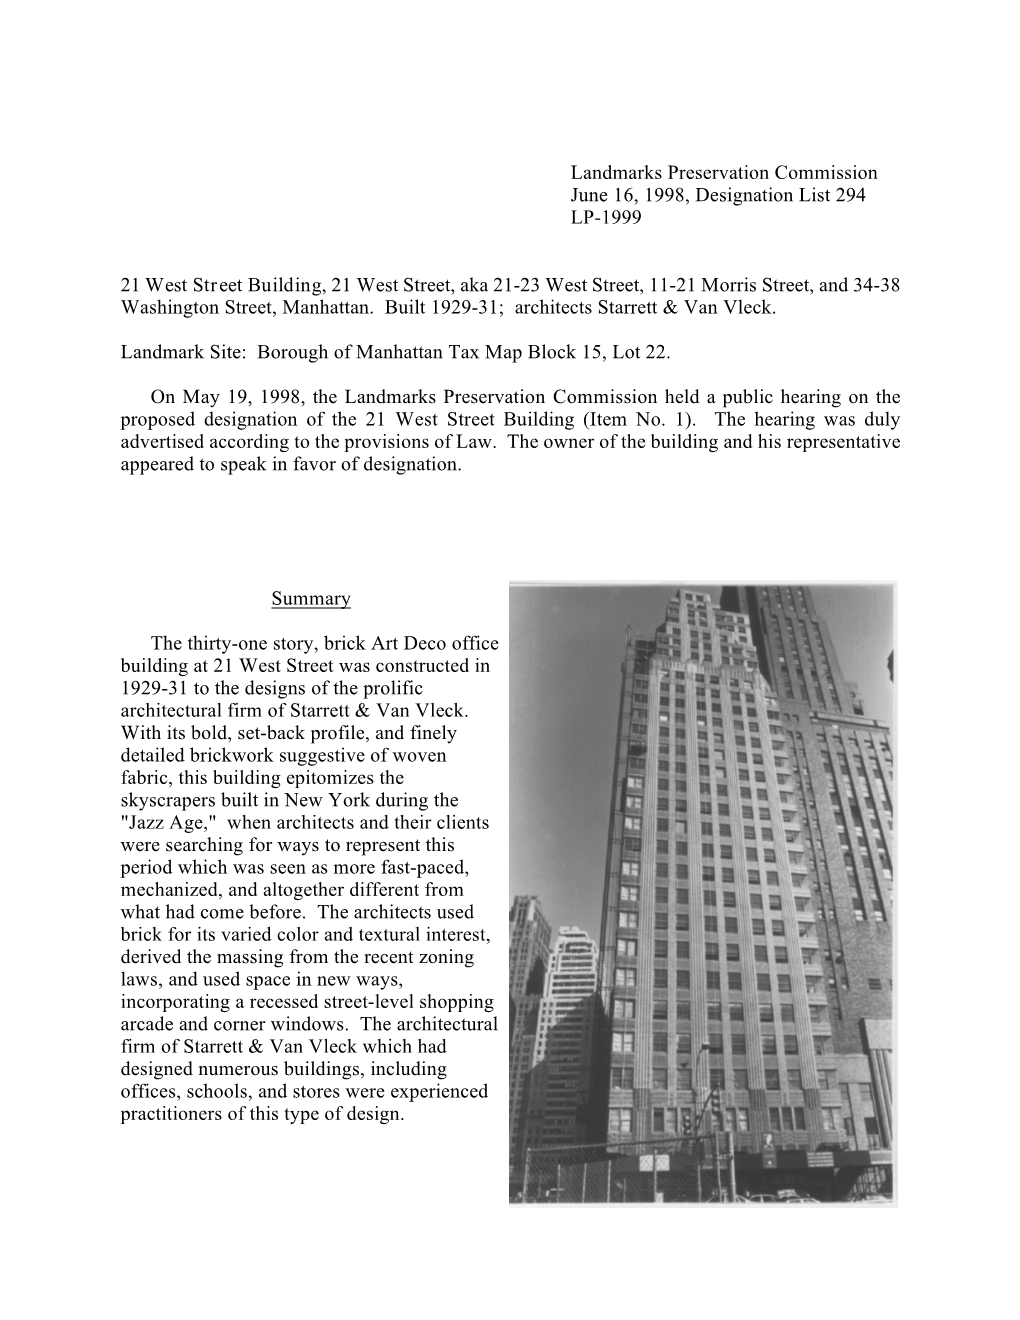 21 West Street Building Designation Report